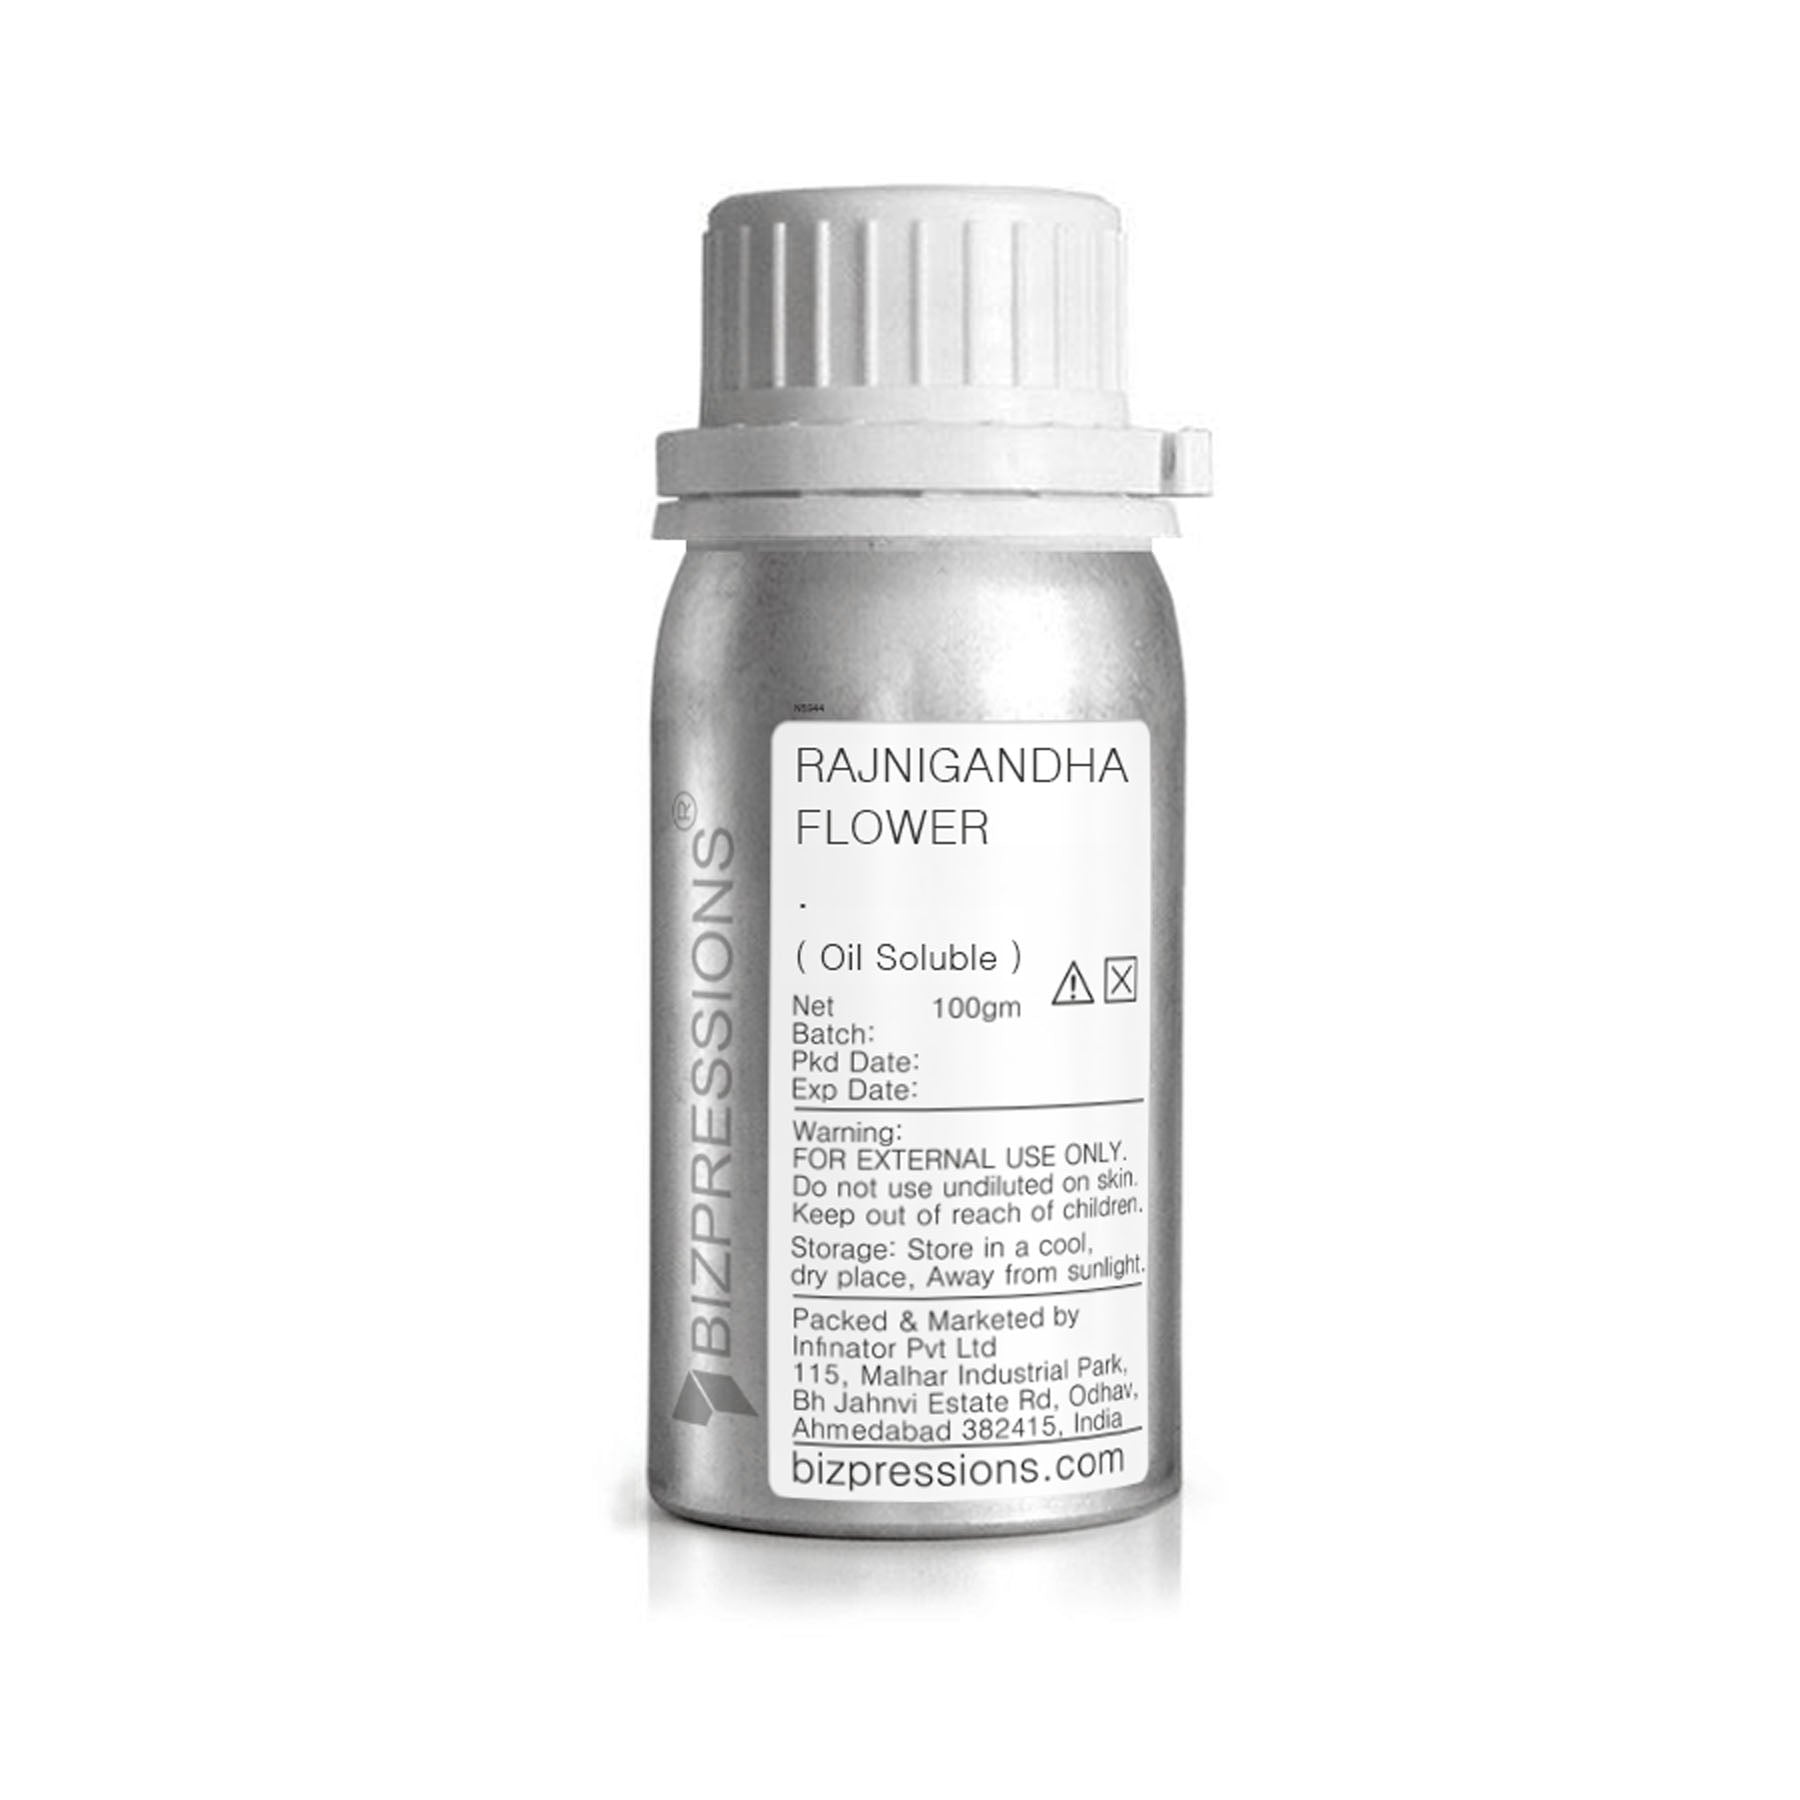 RAJNIGANDHA FLOWER - Fragrance ( Oil Soluble ) - 100 gm